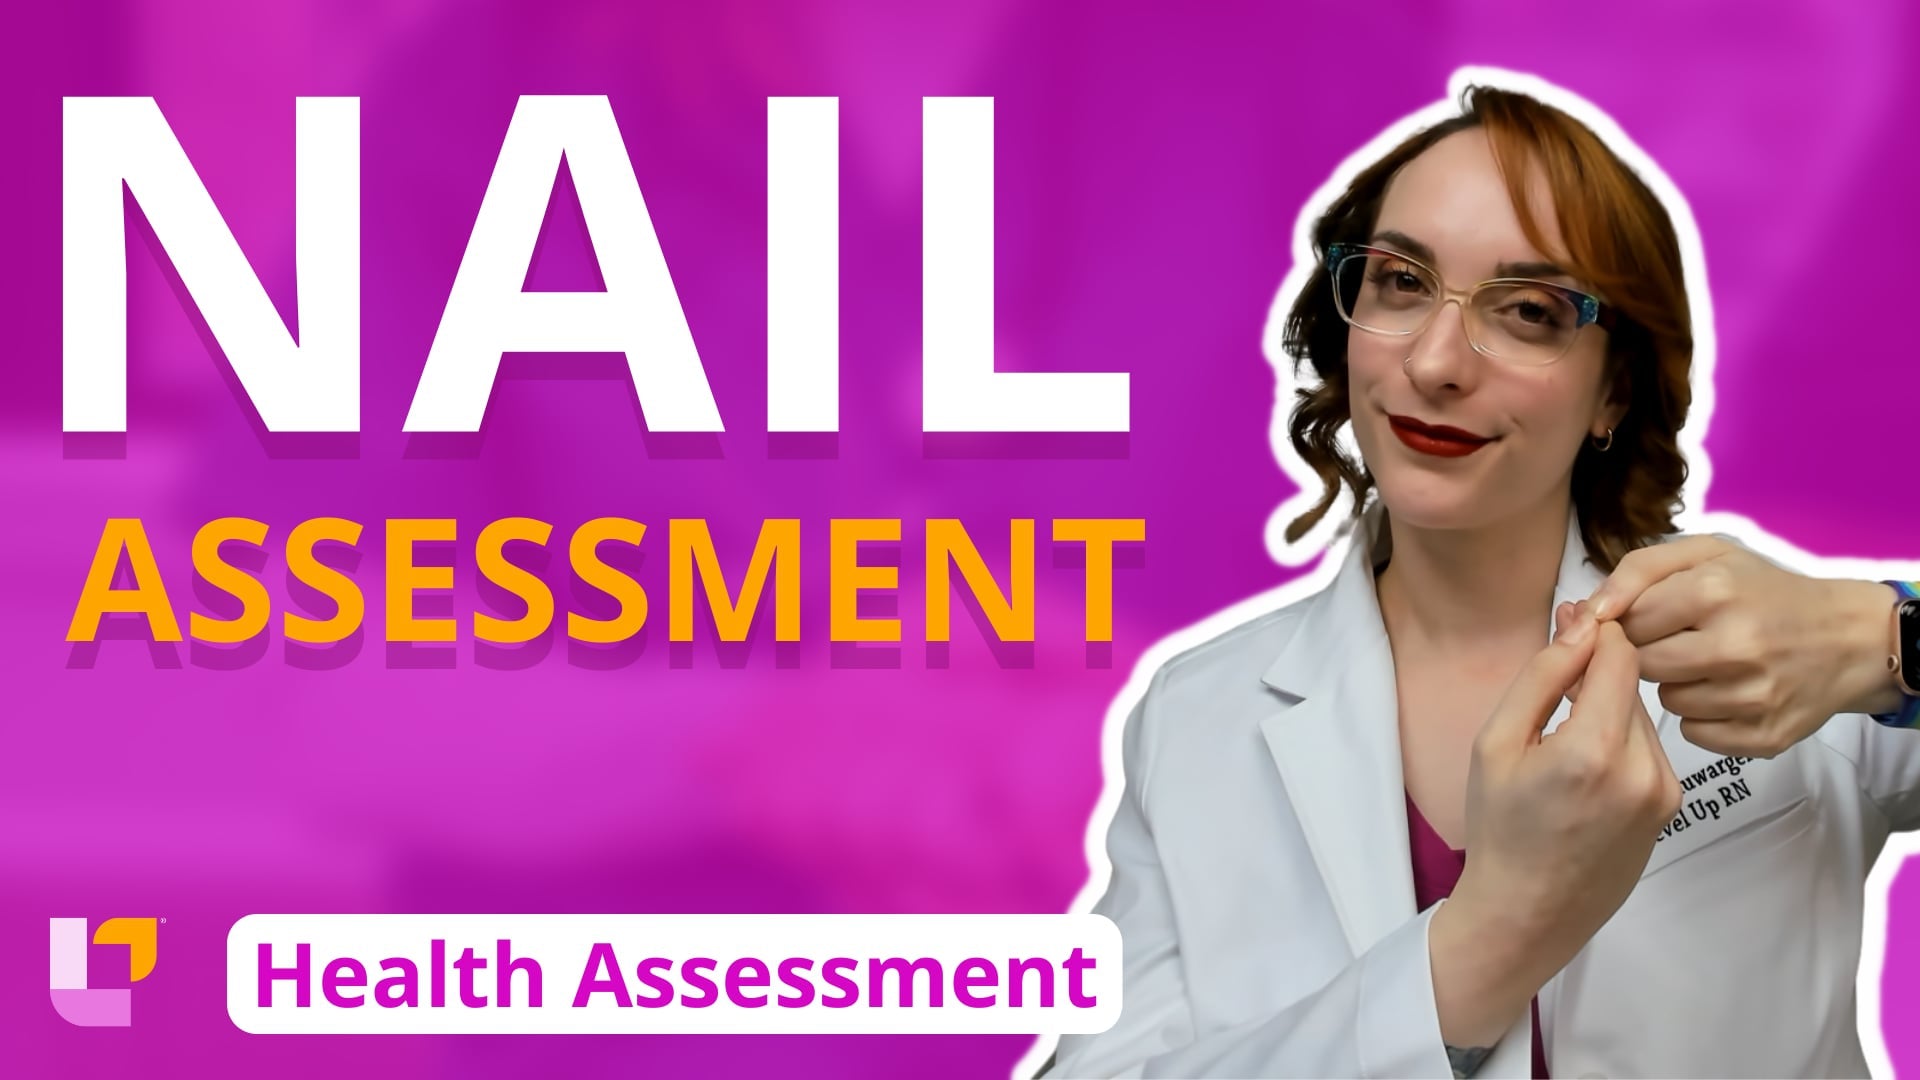 Health Assessment, part 14: Nail Assessment - LevelUpRN